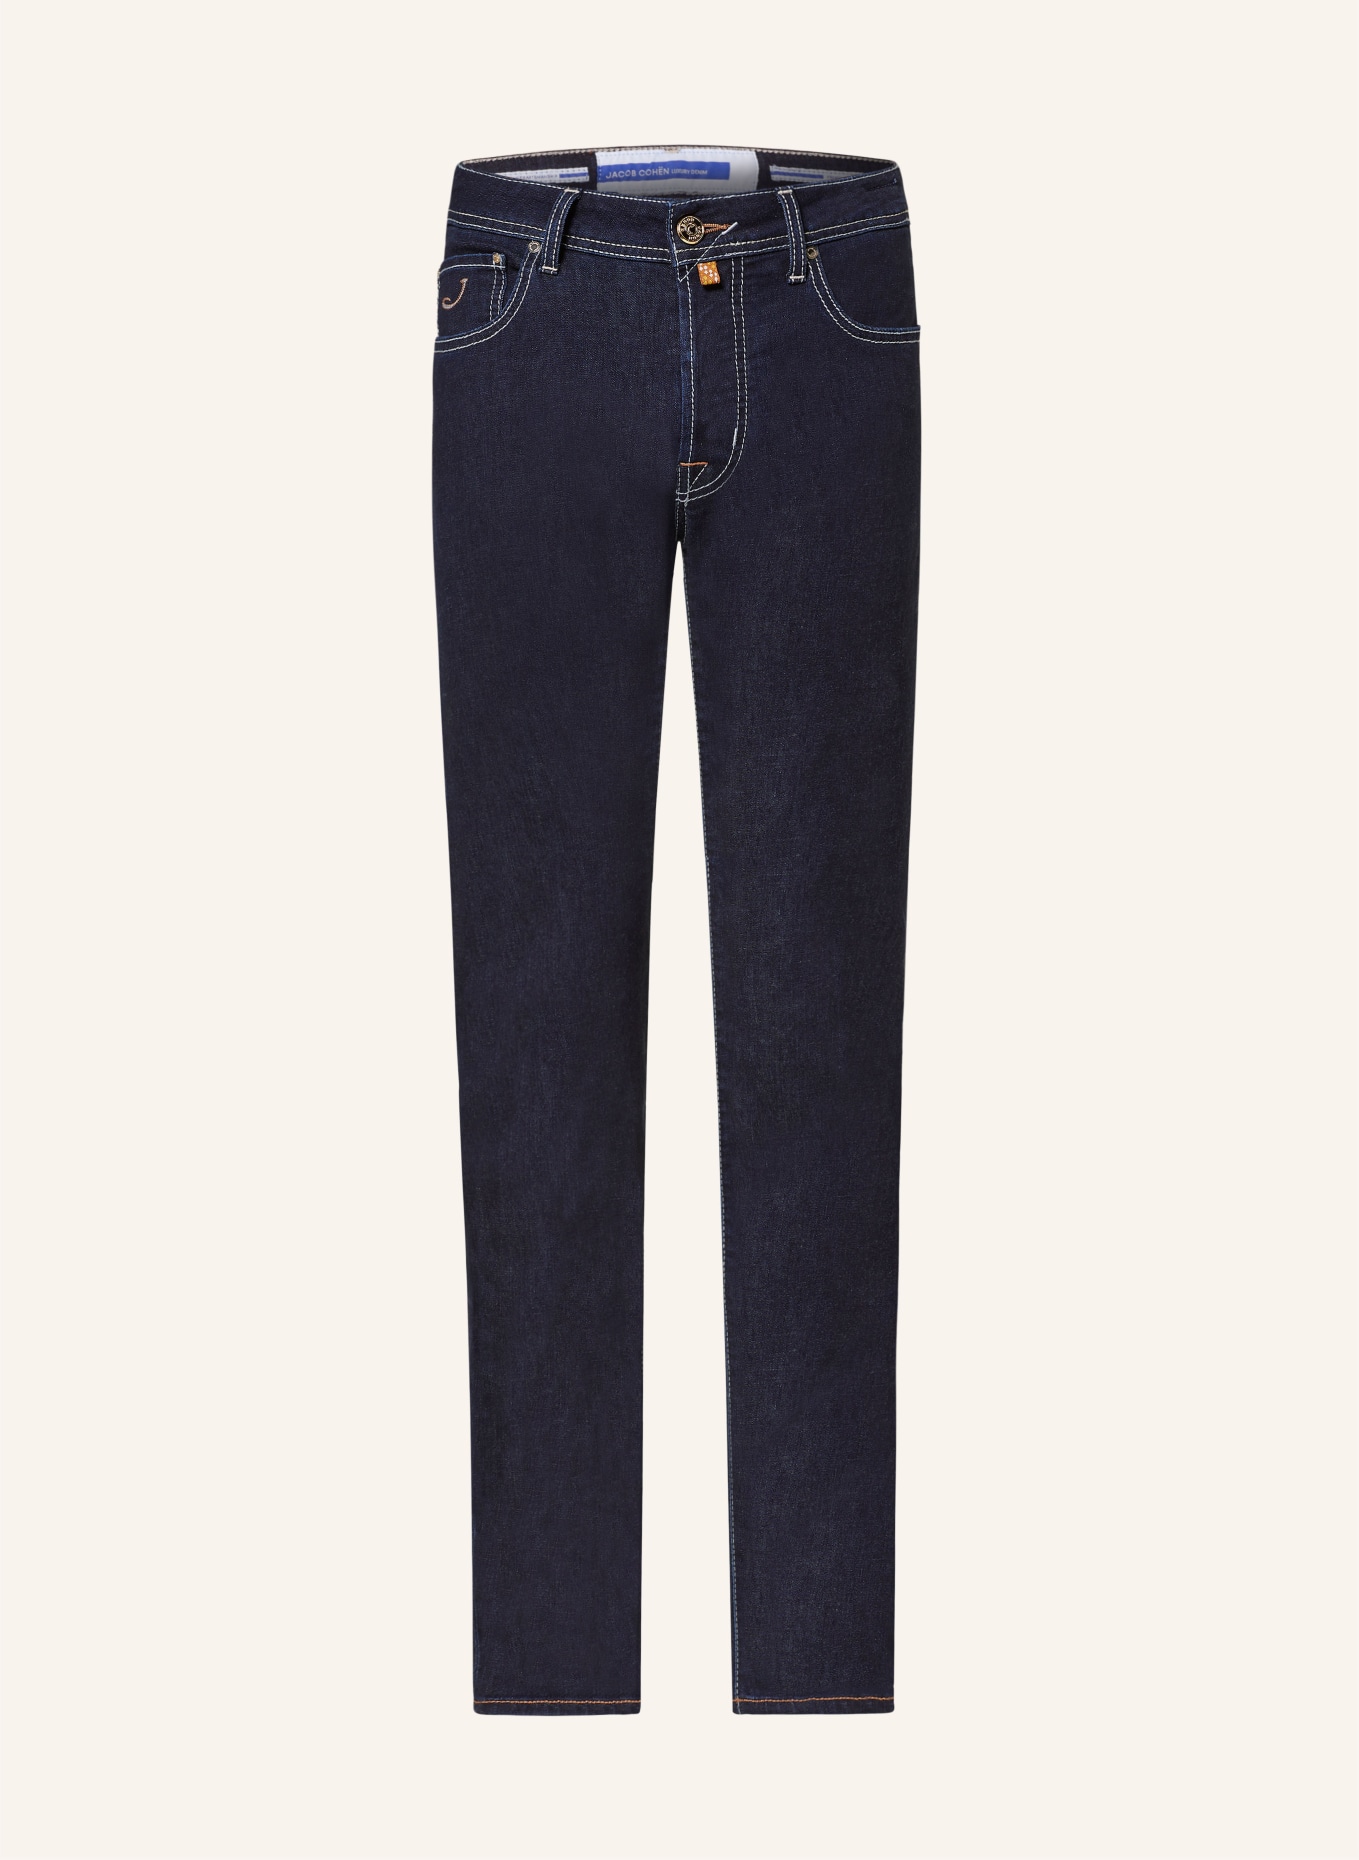 JACOB COHEN Jeans BARD Slim Fit, Farbe: 678D Dark Blue (Bild 1)